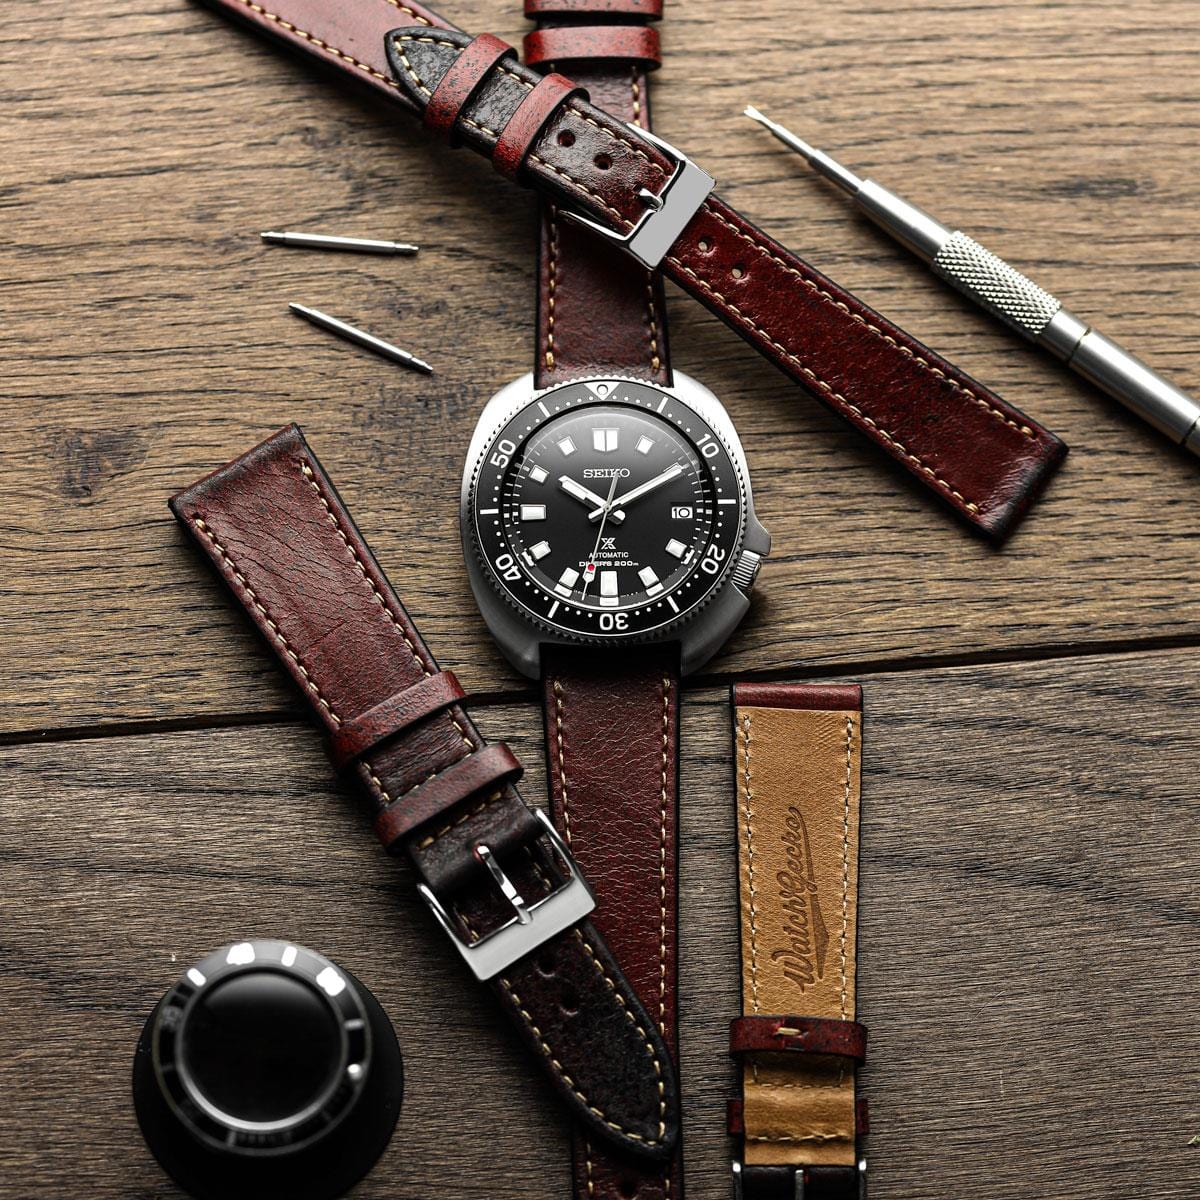 Radstock Vintage Genuine Leather Watch Strap - Vintage Red